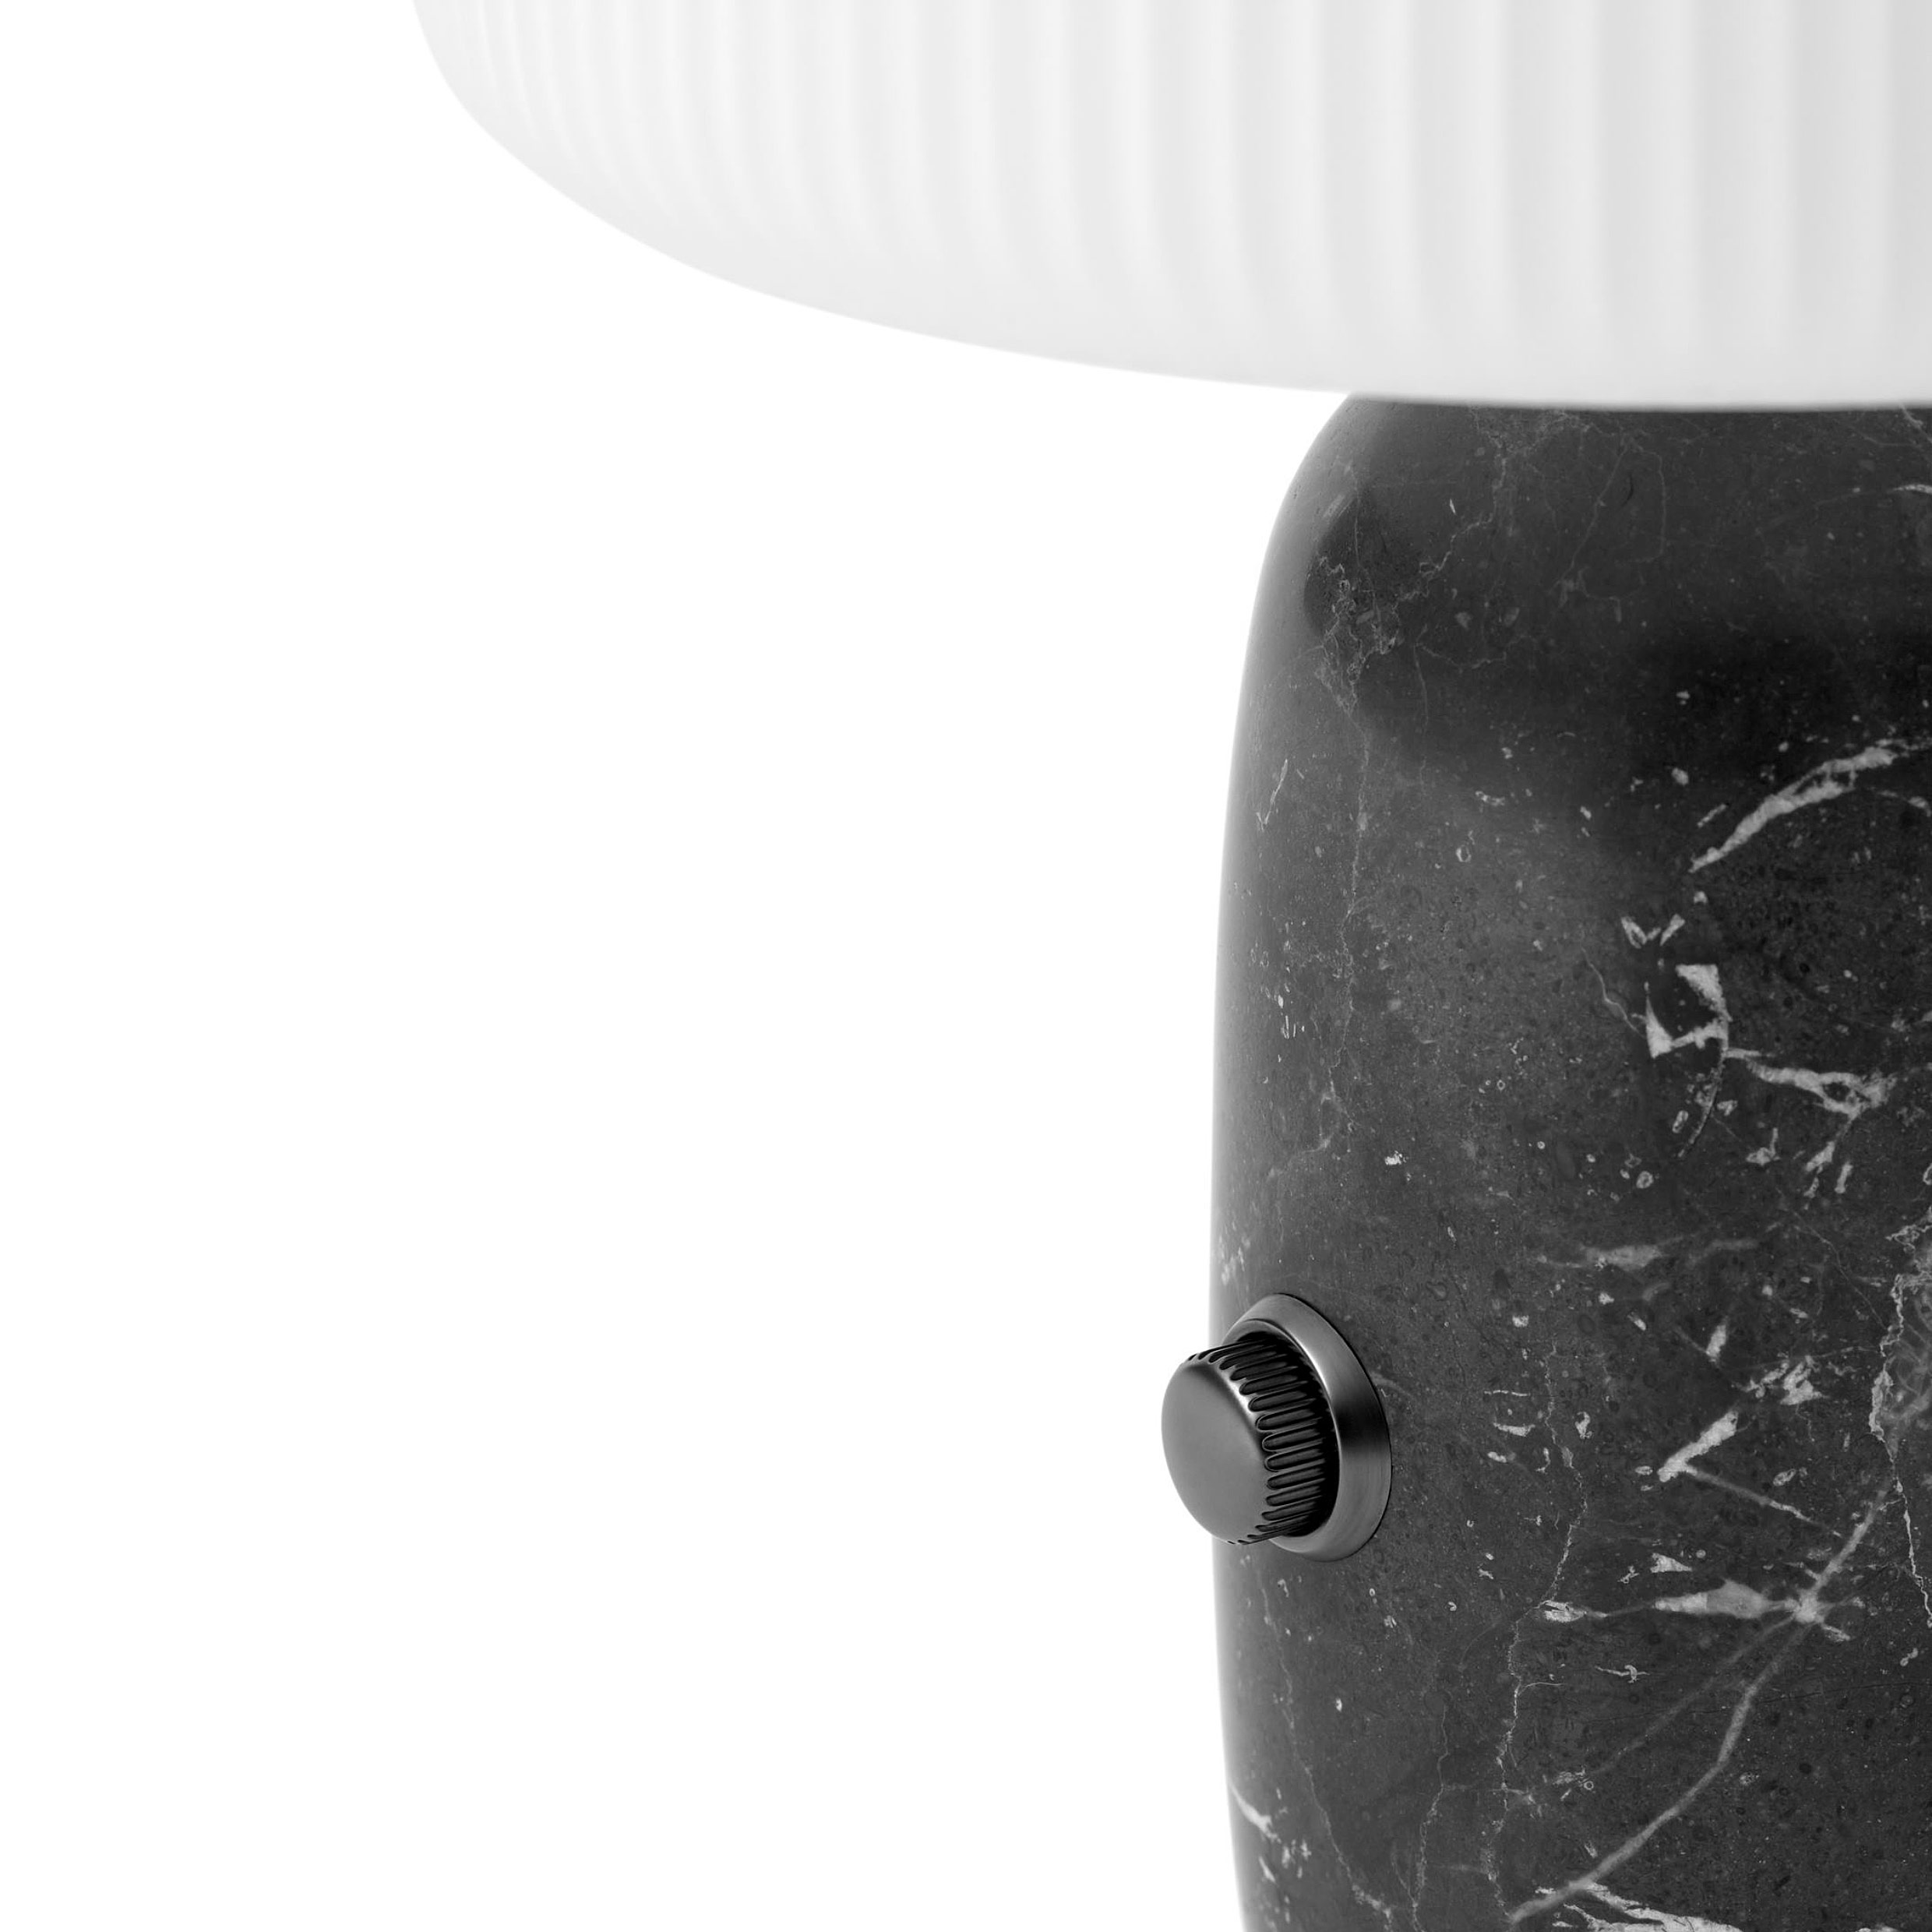 VIPP // SCULPTURE TABLE LAMP SMALL - TISCHLAMPE | SCHWARZ